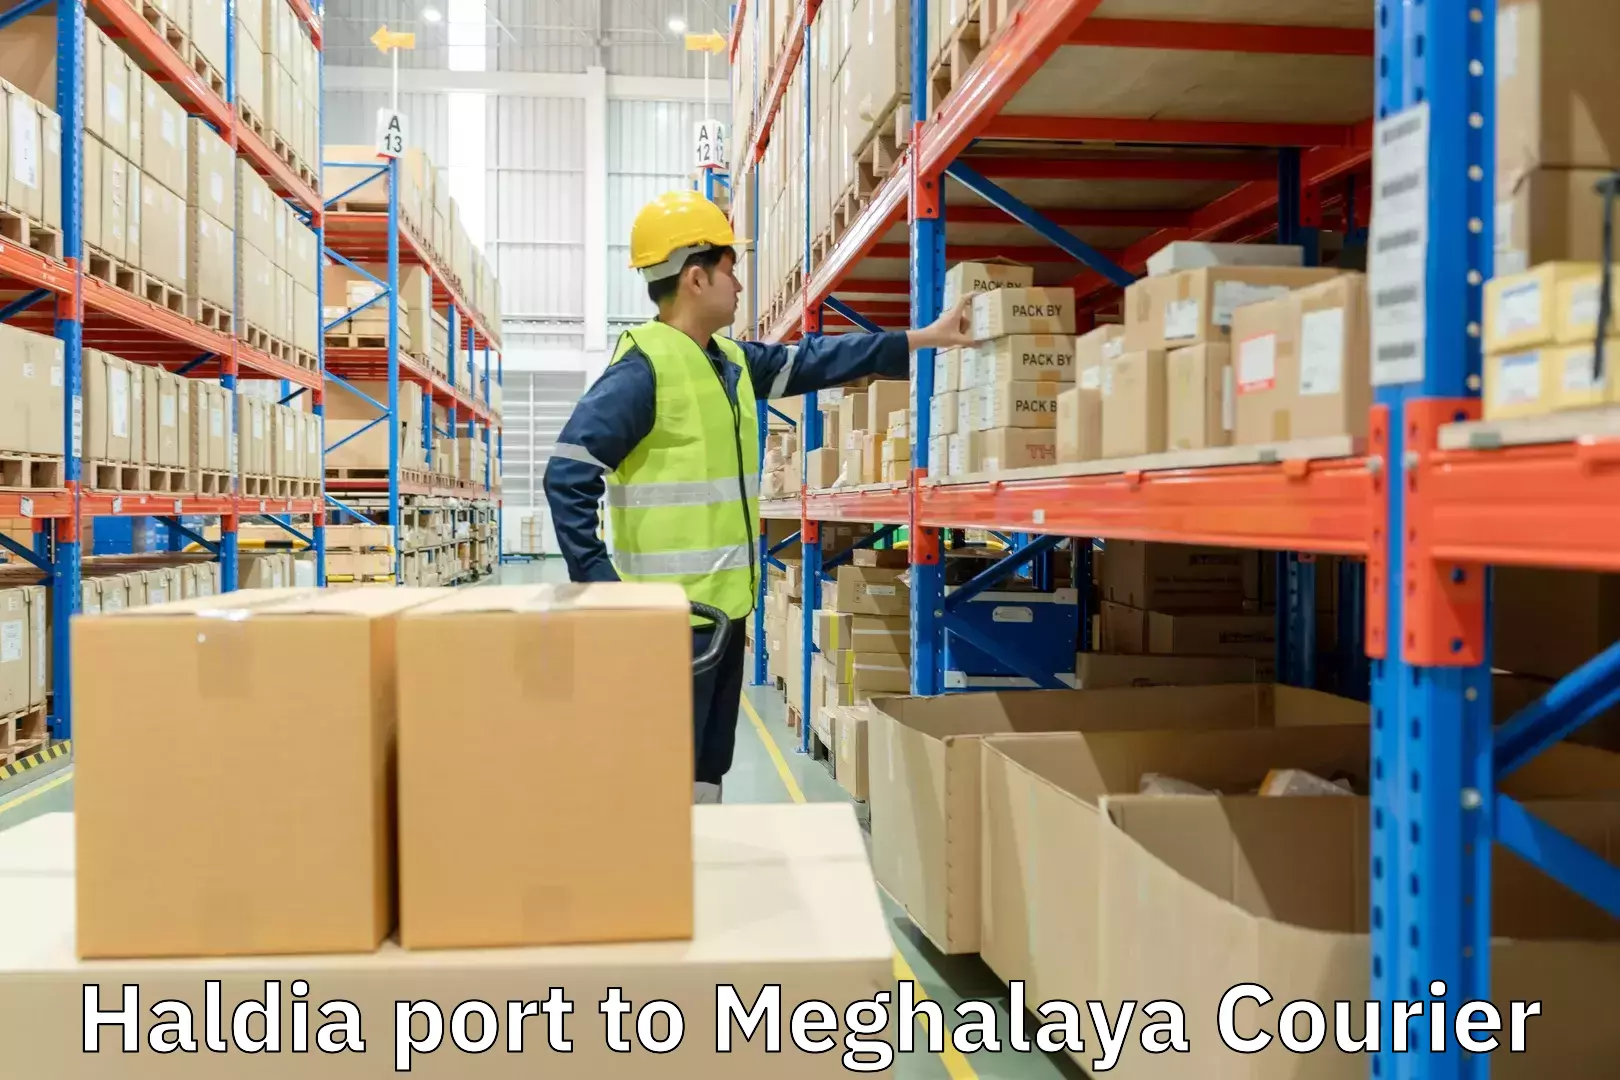 Large package courier Haldia port to Cherrapunji